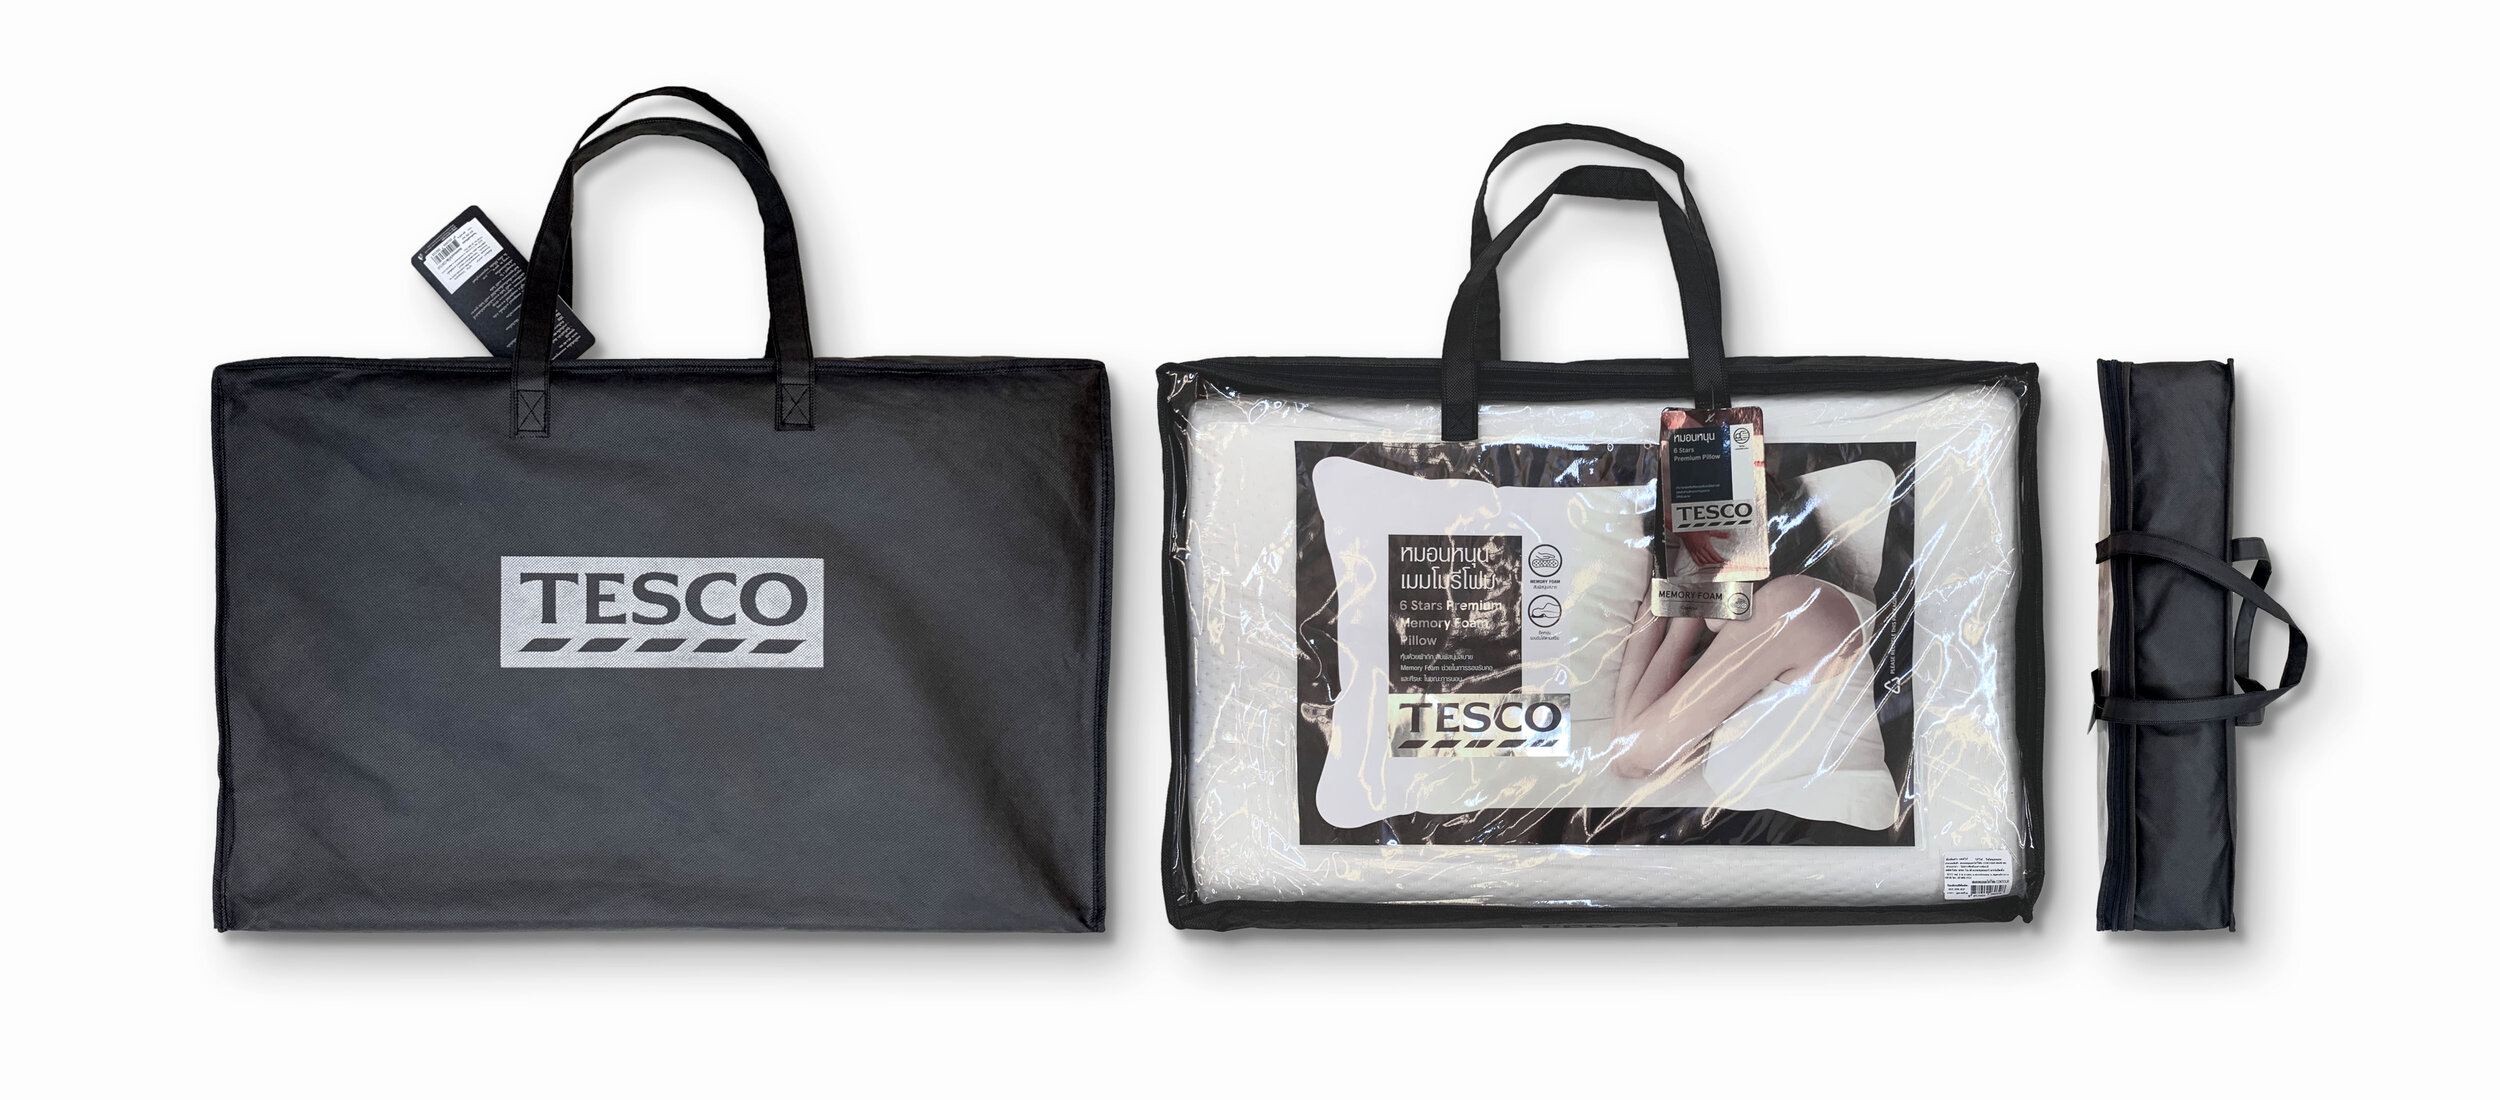 Tesco Pillow Bag.jpg